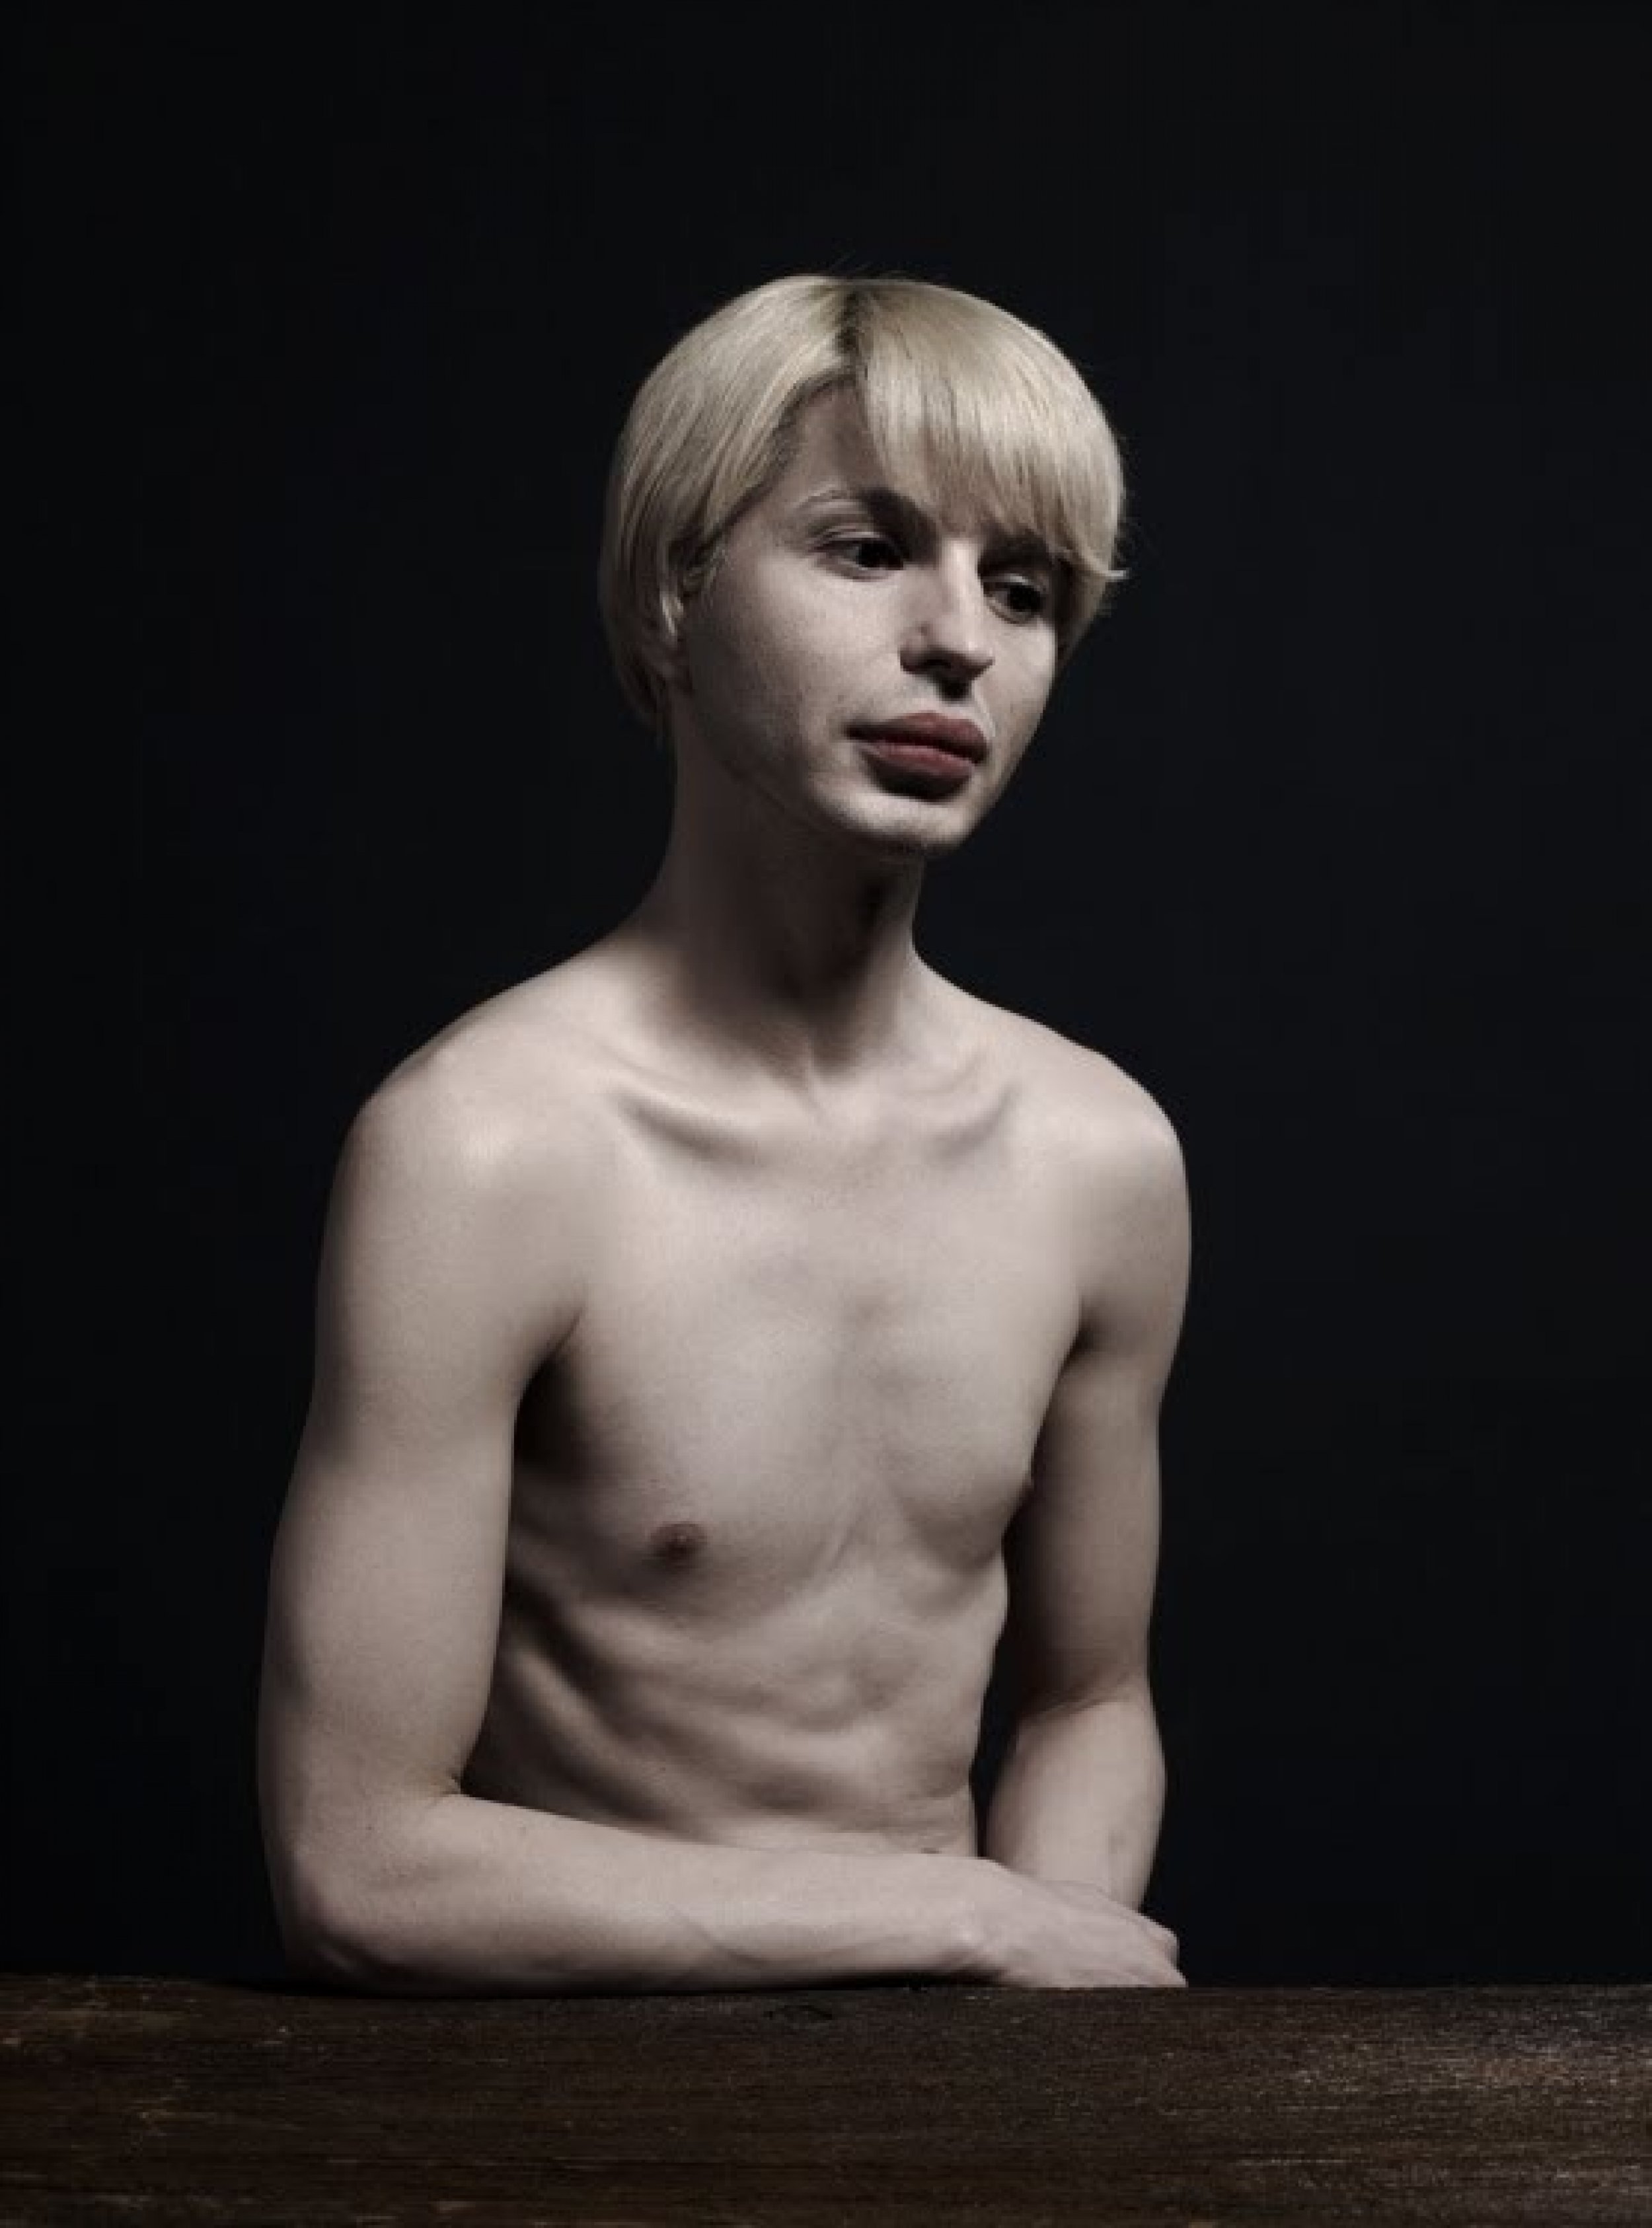 Photographers Extreme plastic surgery images questions true beauty PHOTOS